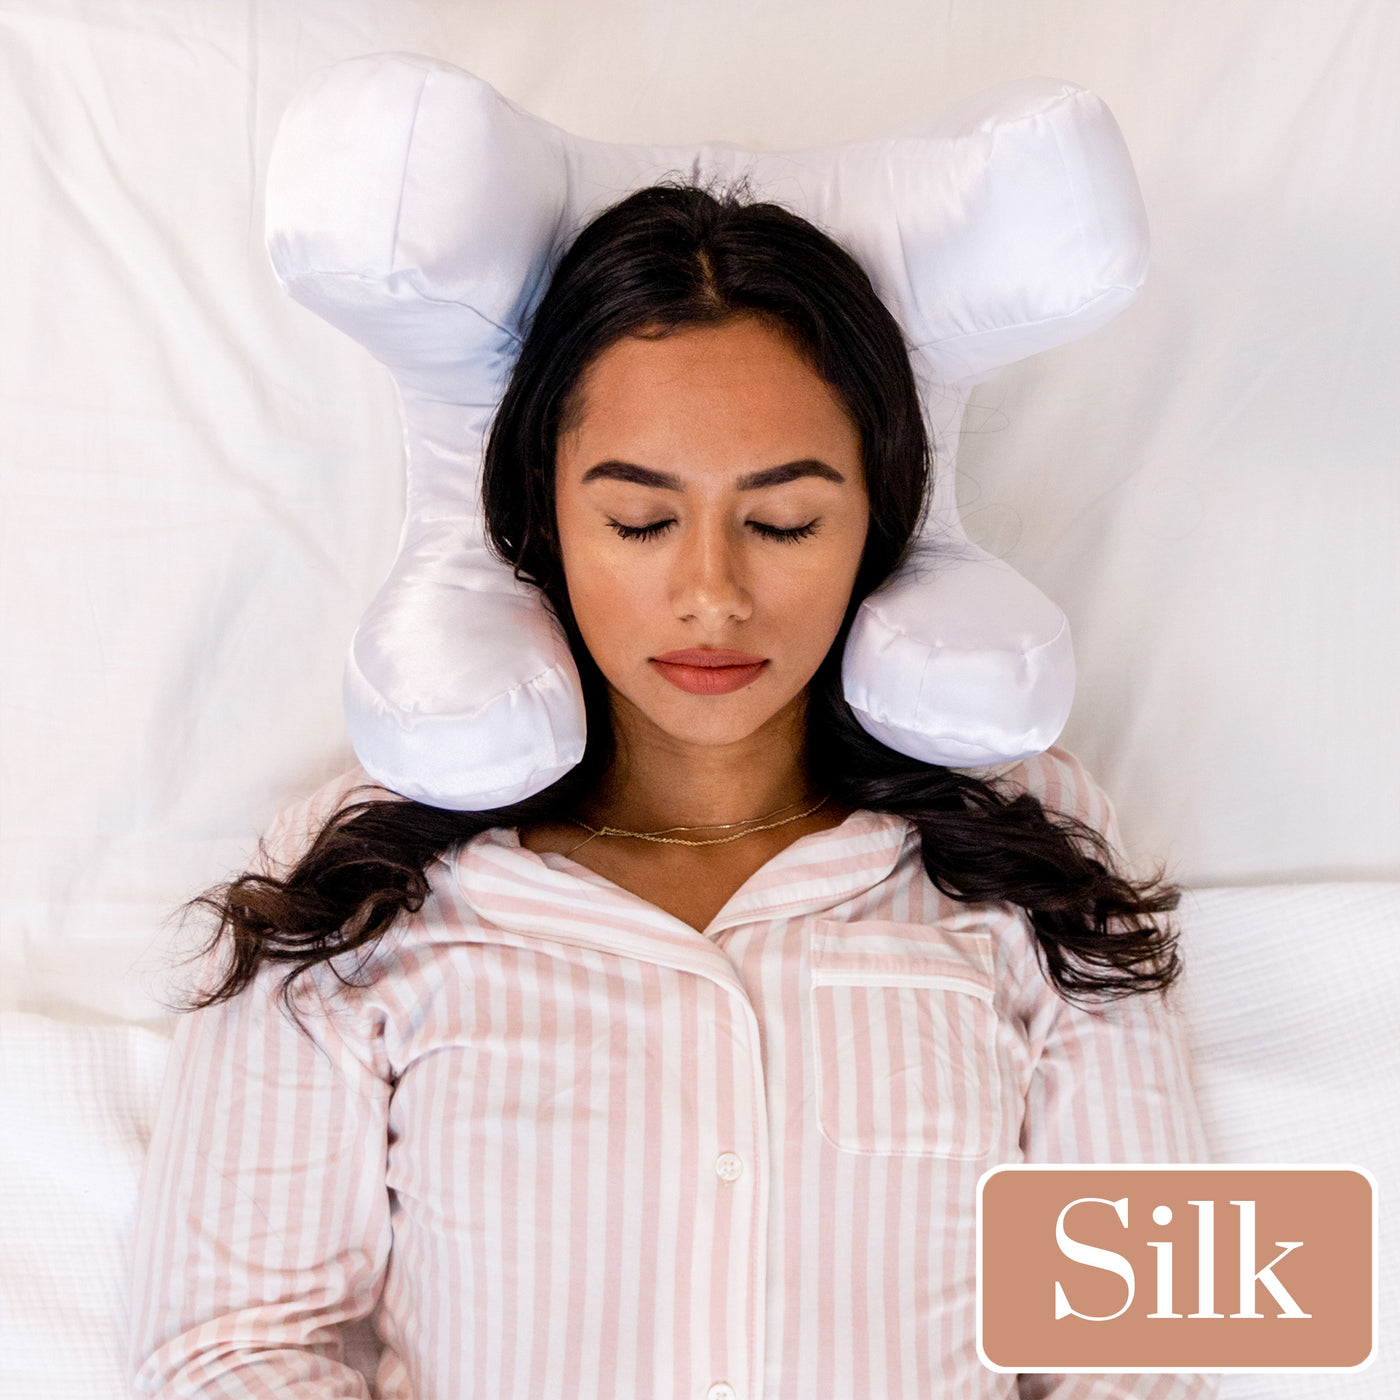 NEW Flawless Face Pillow Cloud + FREE Premium White Silk Pillowcase